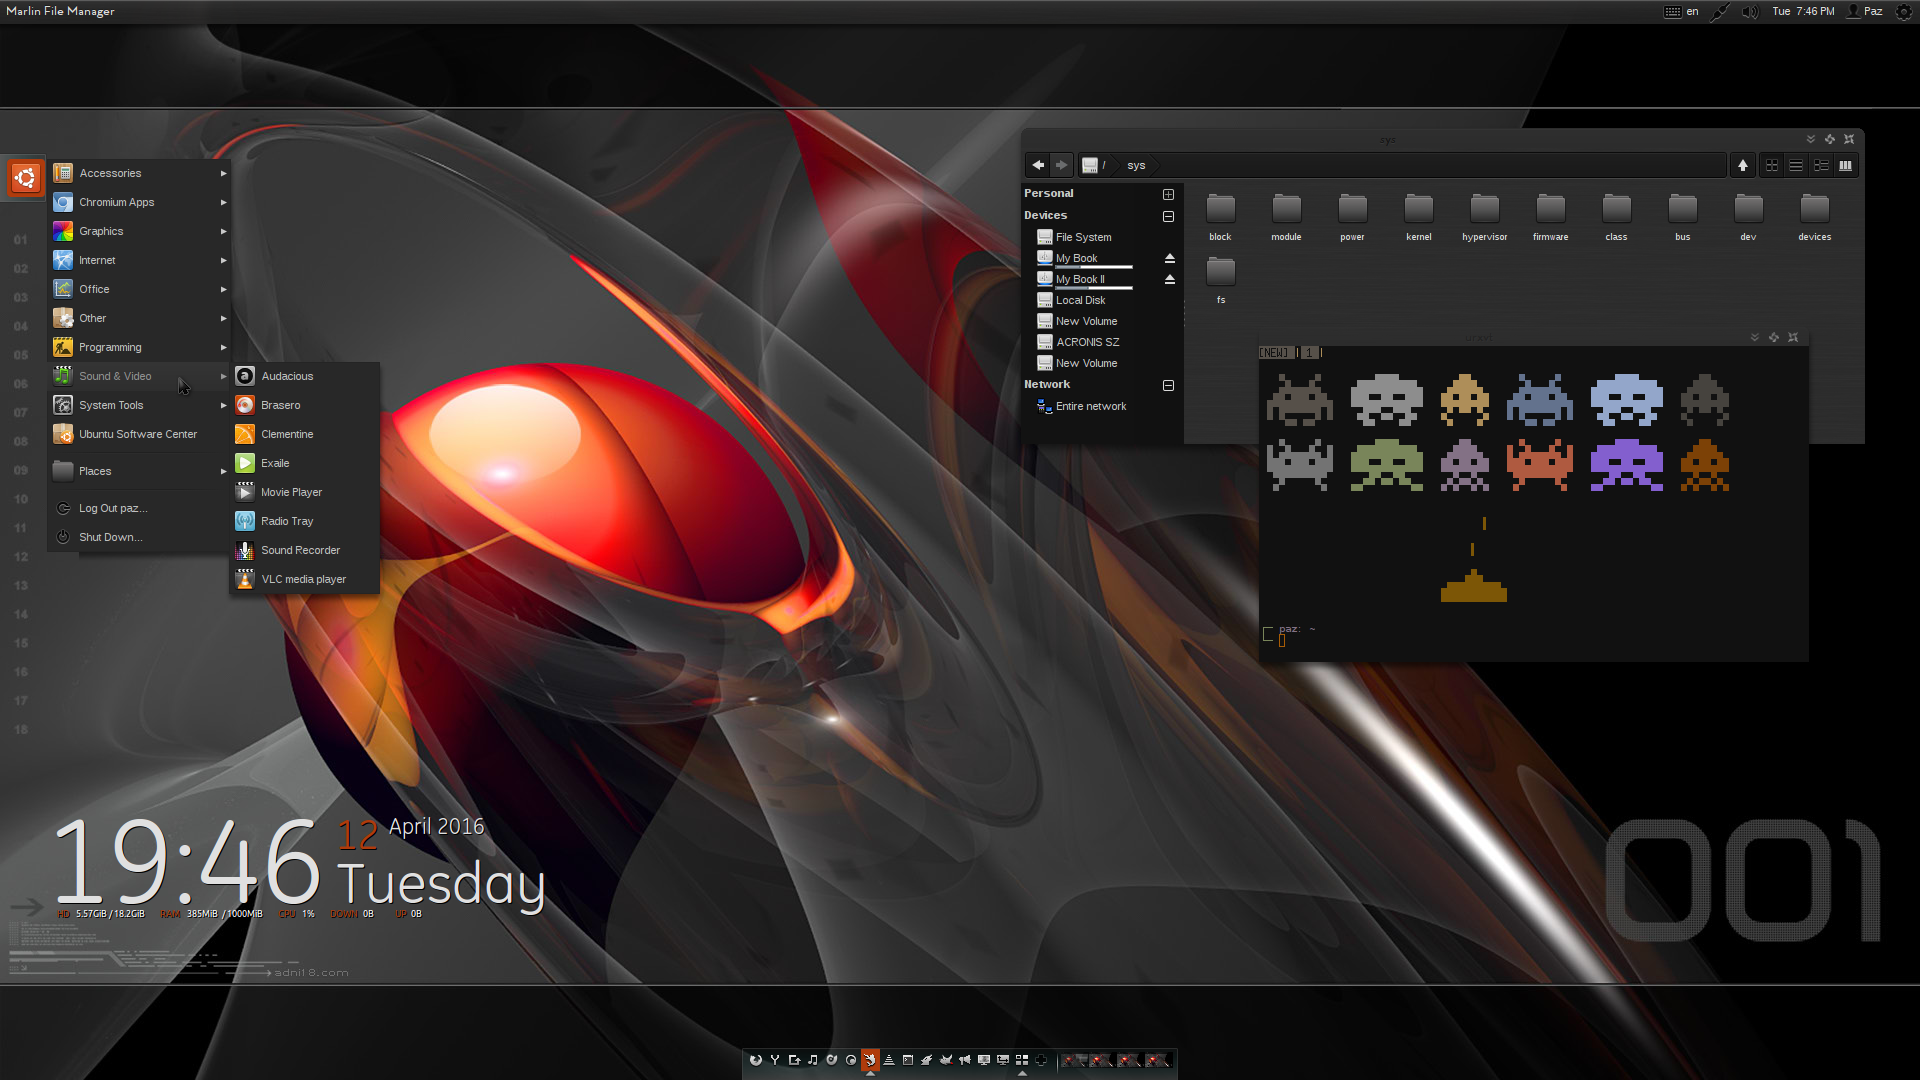 Ubuntu Precise - New monitor